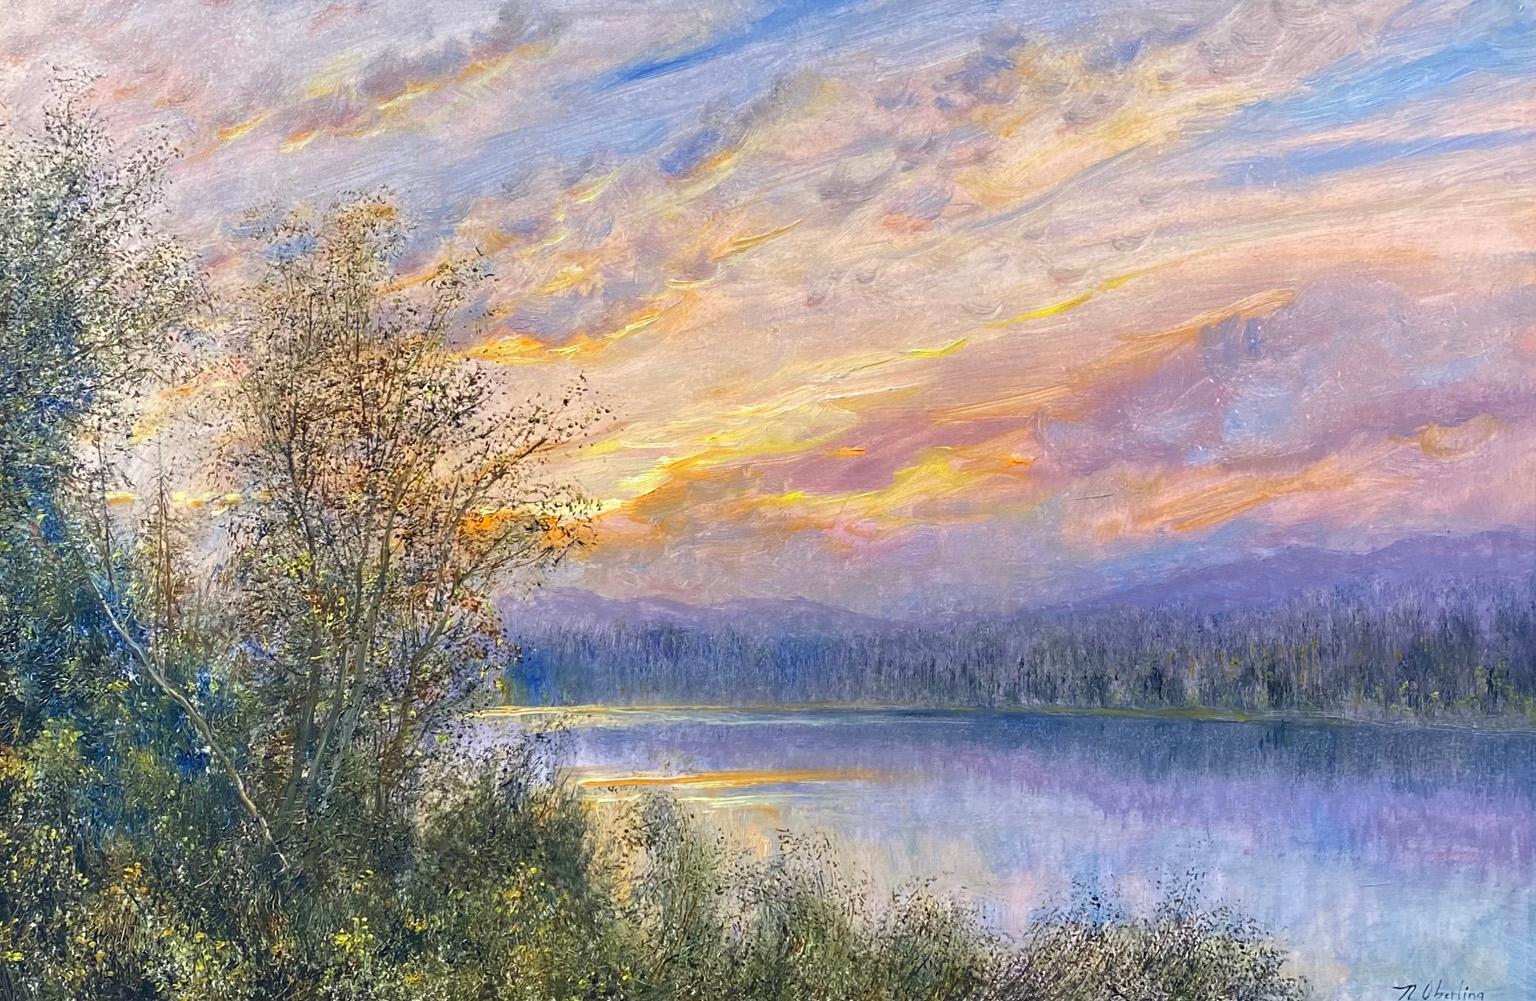 Nicholas Oberling Landscape Painting - Lake Five Sunset near Glacier National Park in Montana